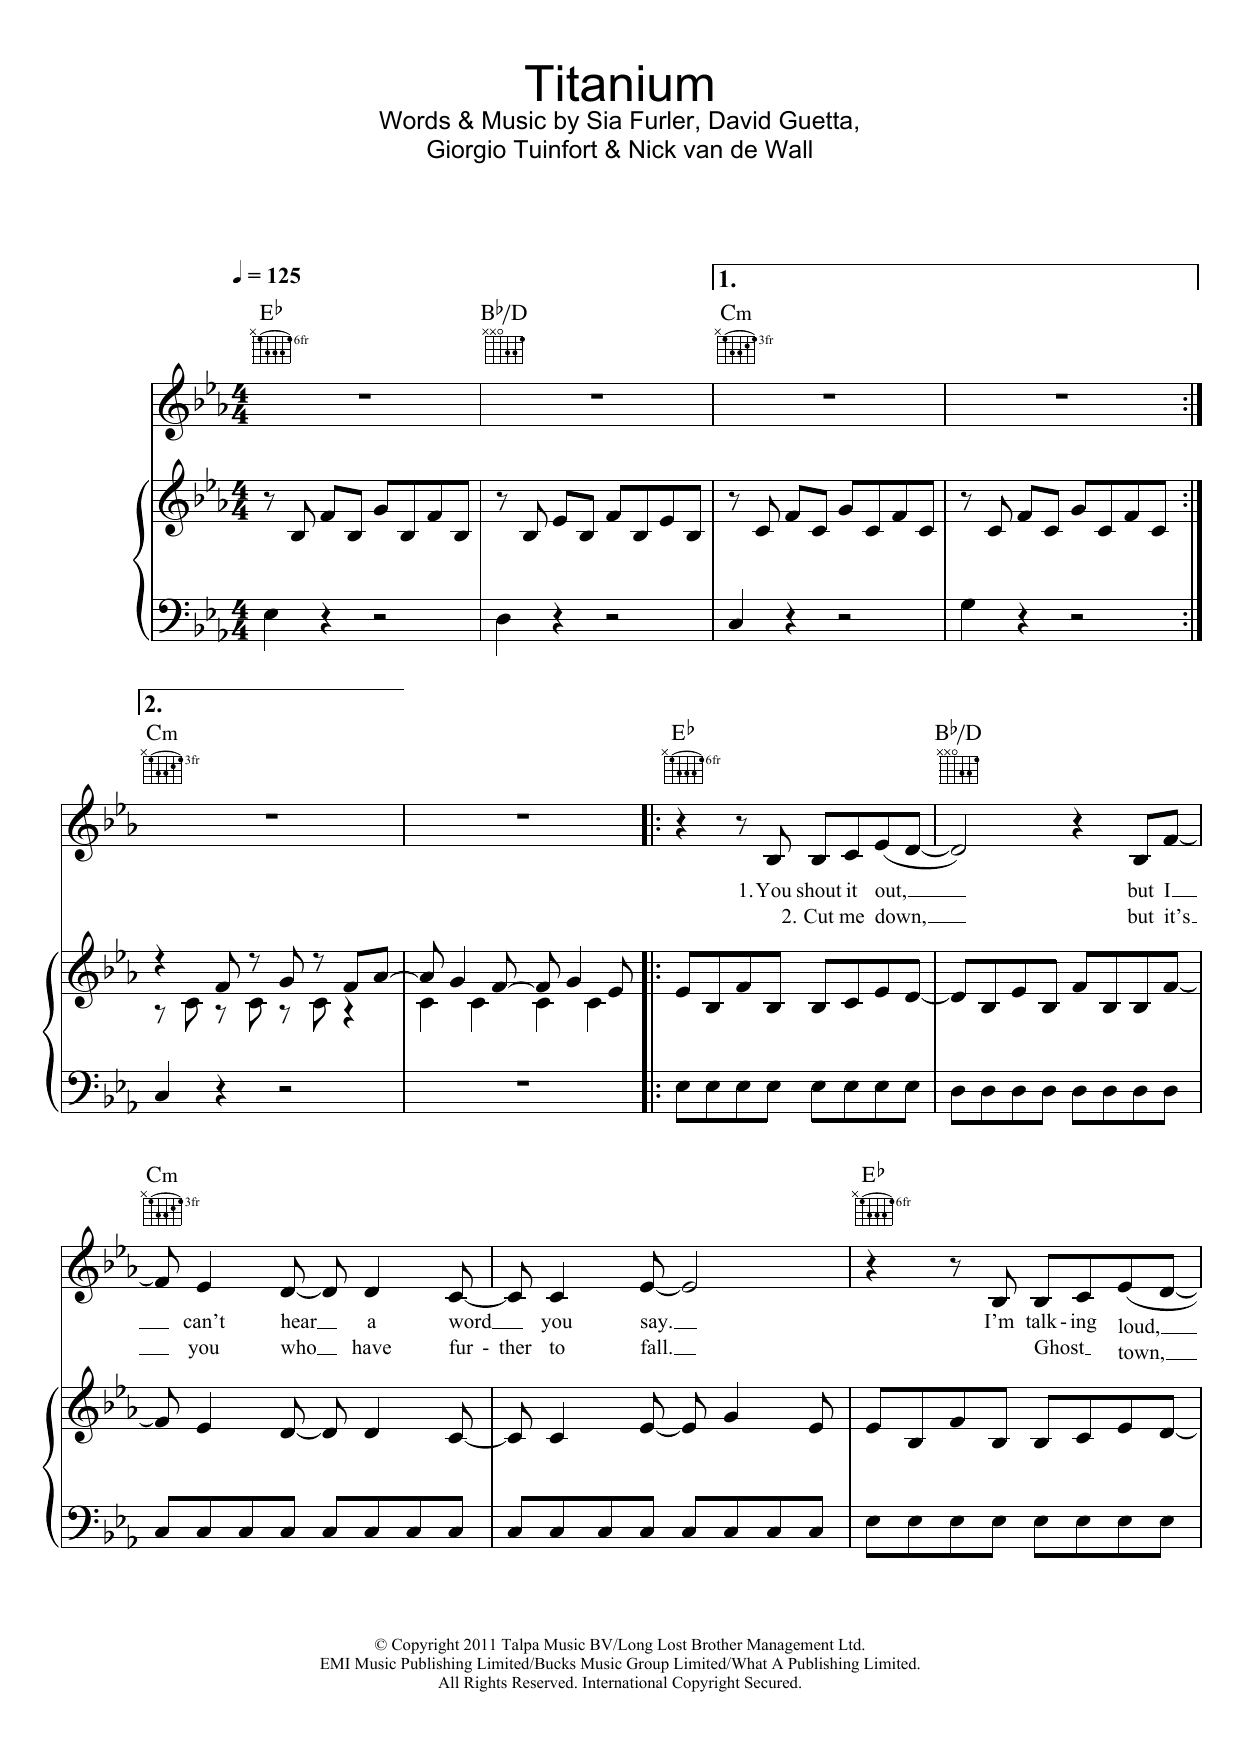 David Guetta Titanium (featuring Sia) Sheet Music Notes & Chords for Violin - Download or Print PDF